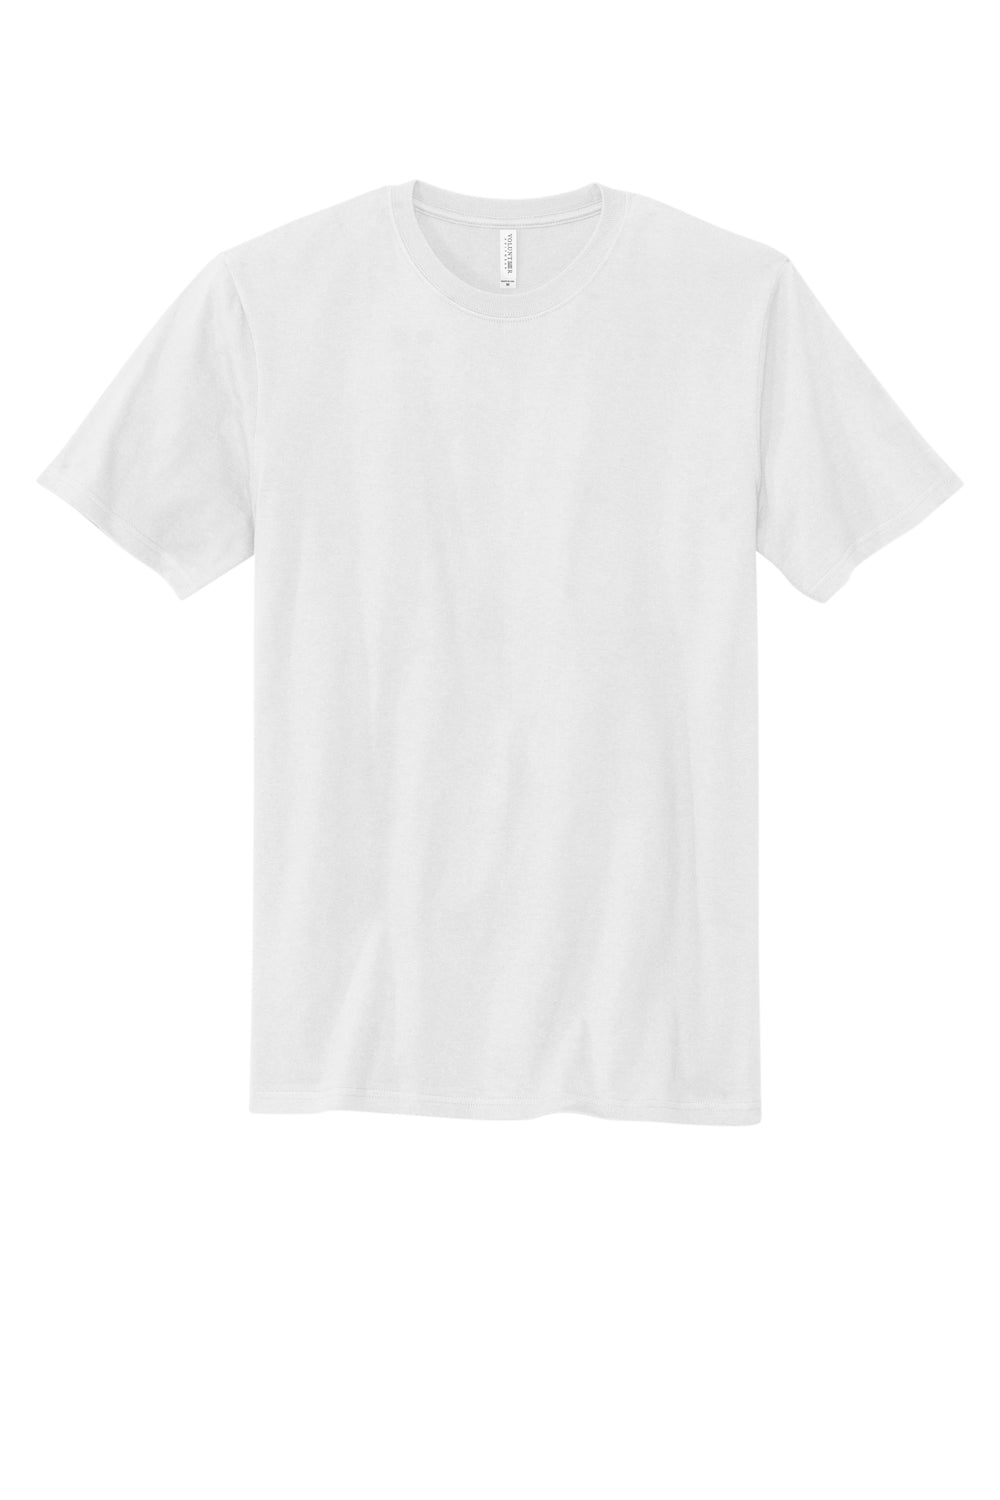 Volunteer Knitwear VL60 Chore Short Sleeve Crewneck T-Shirt White Flat Front